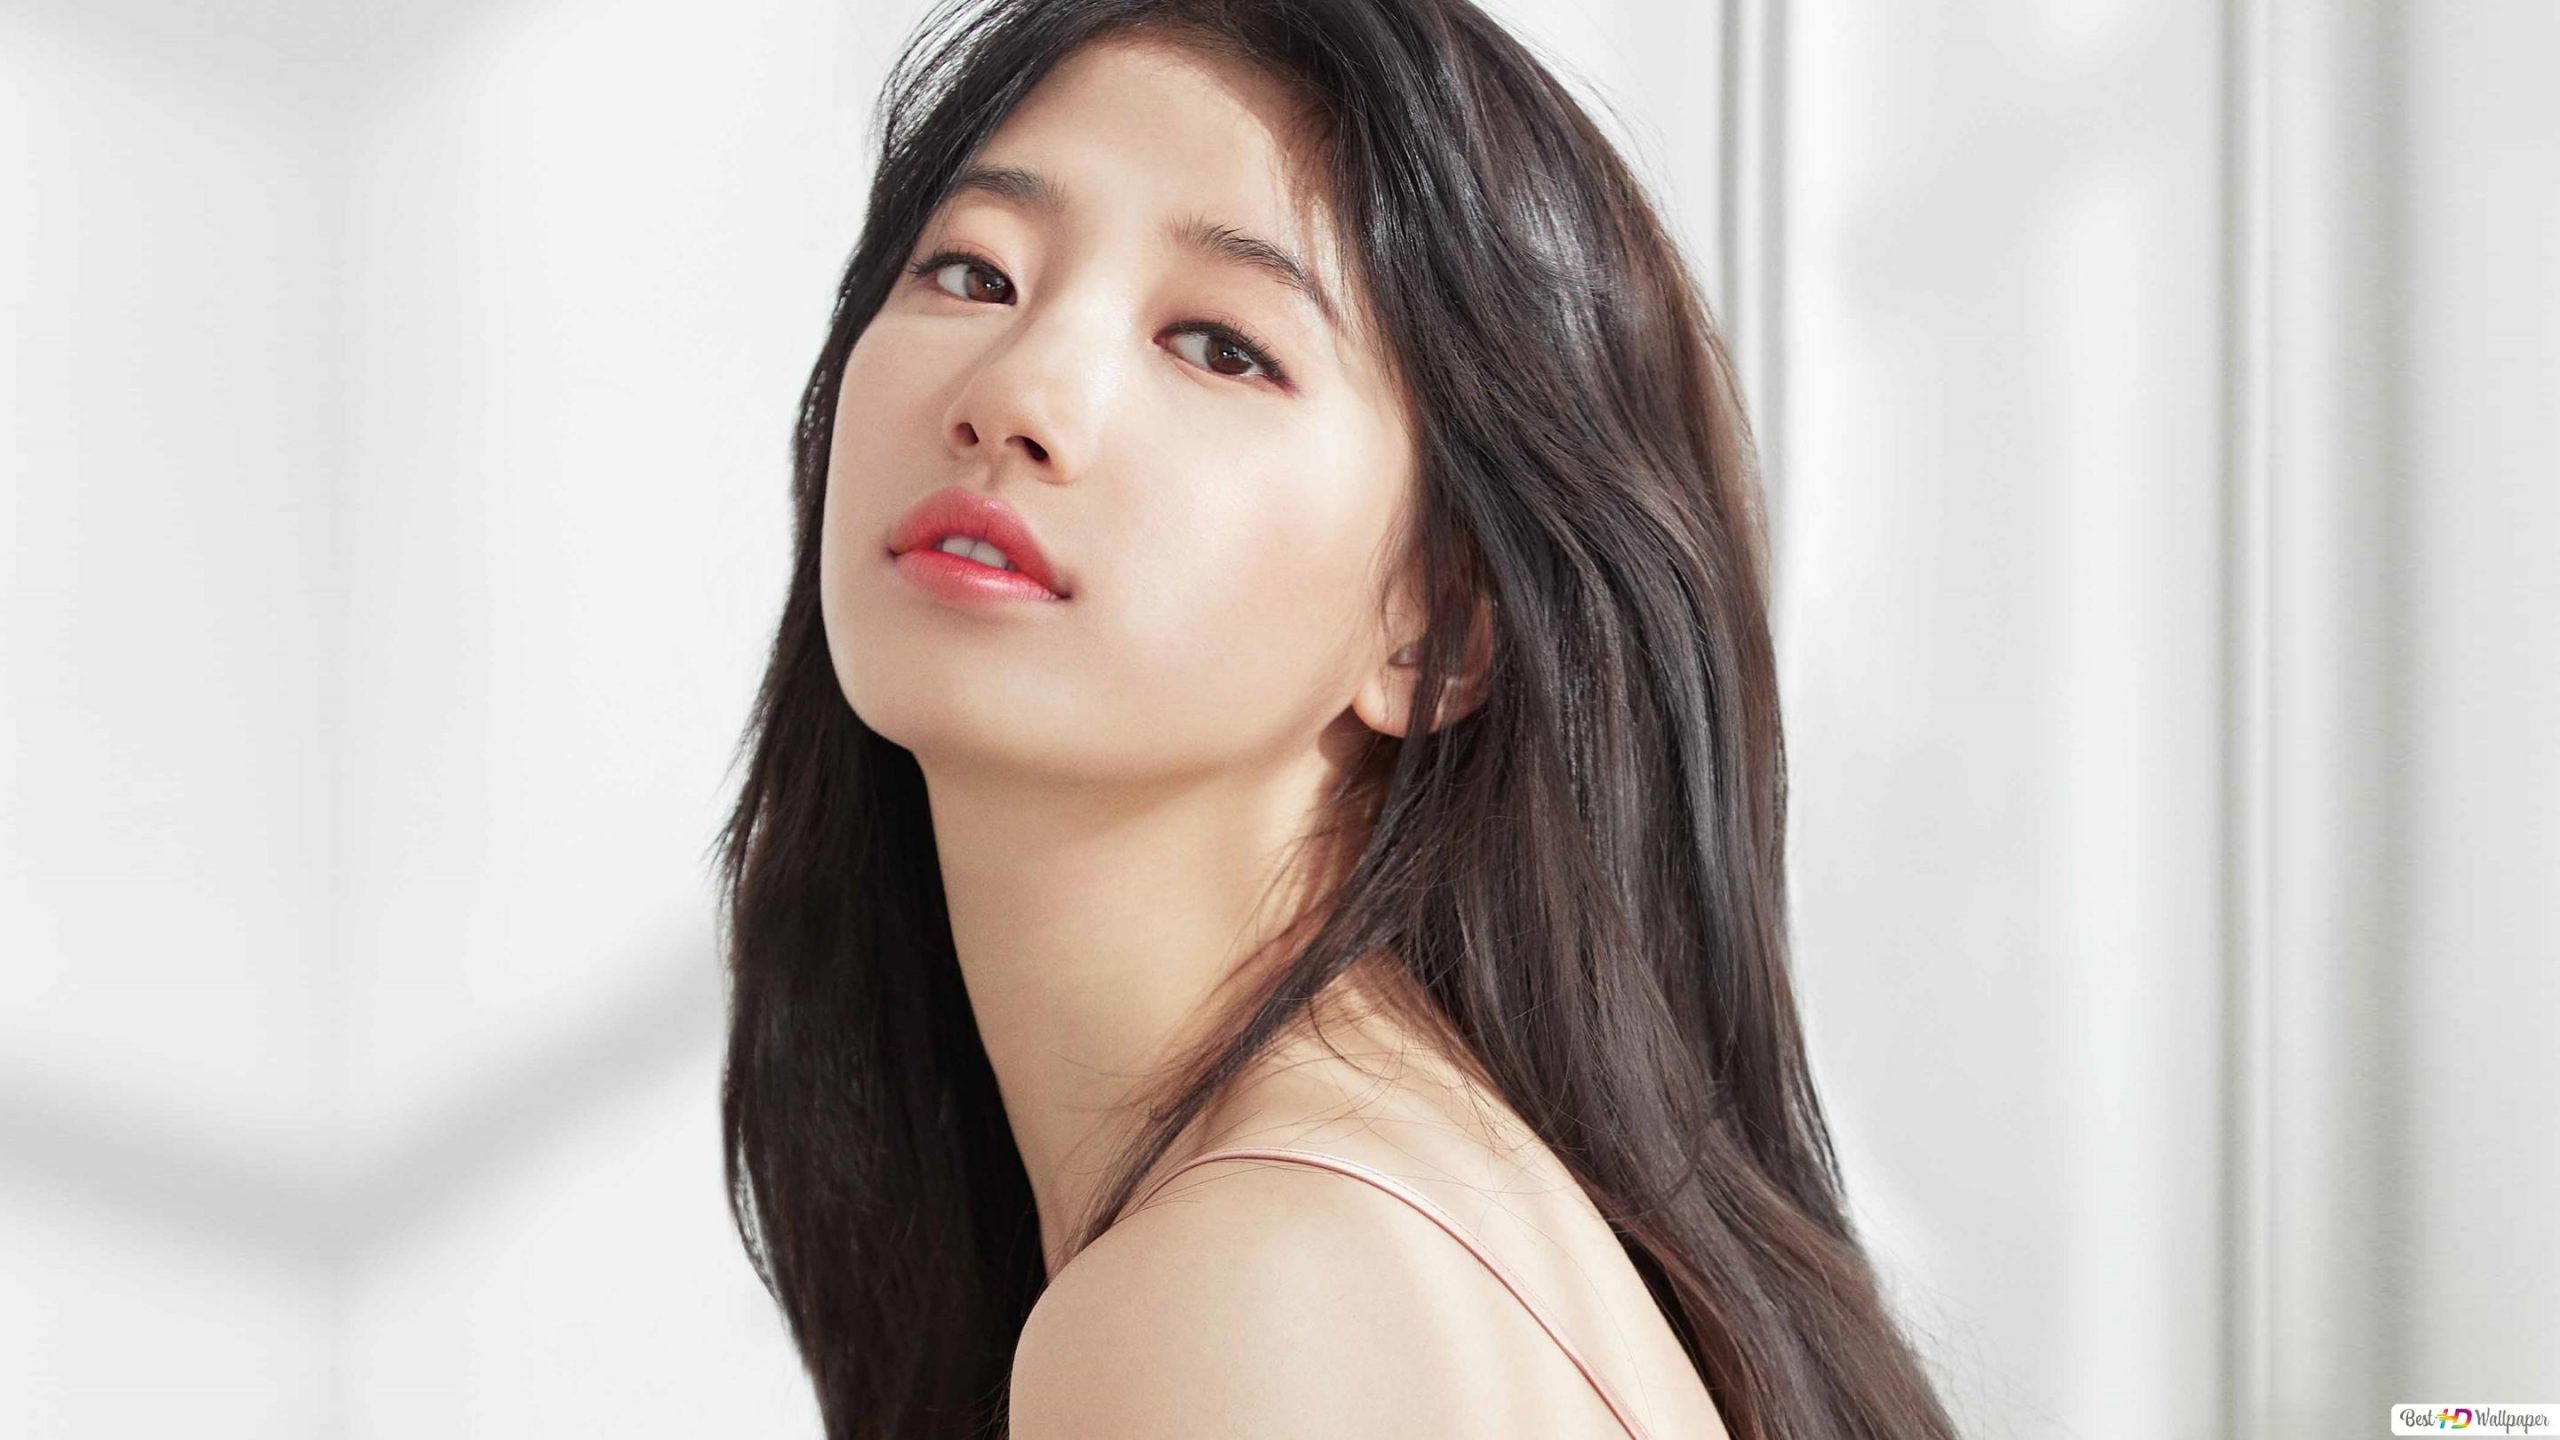 Kpop idosl Korean Beauty Standards